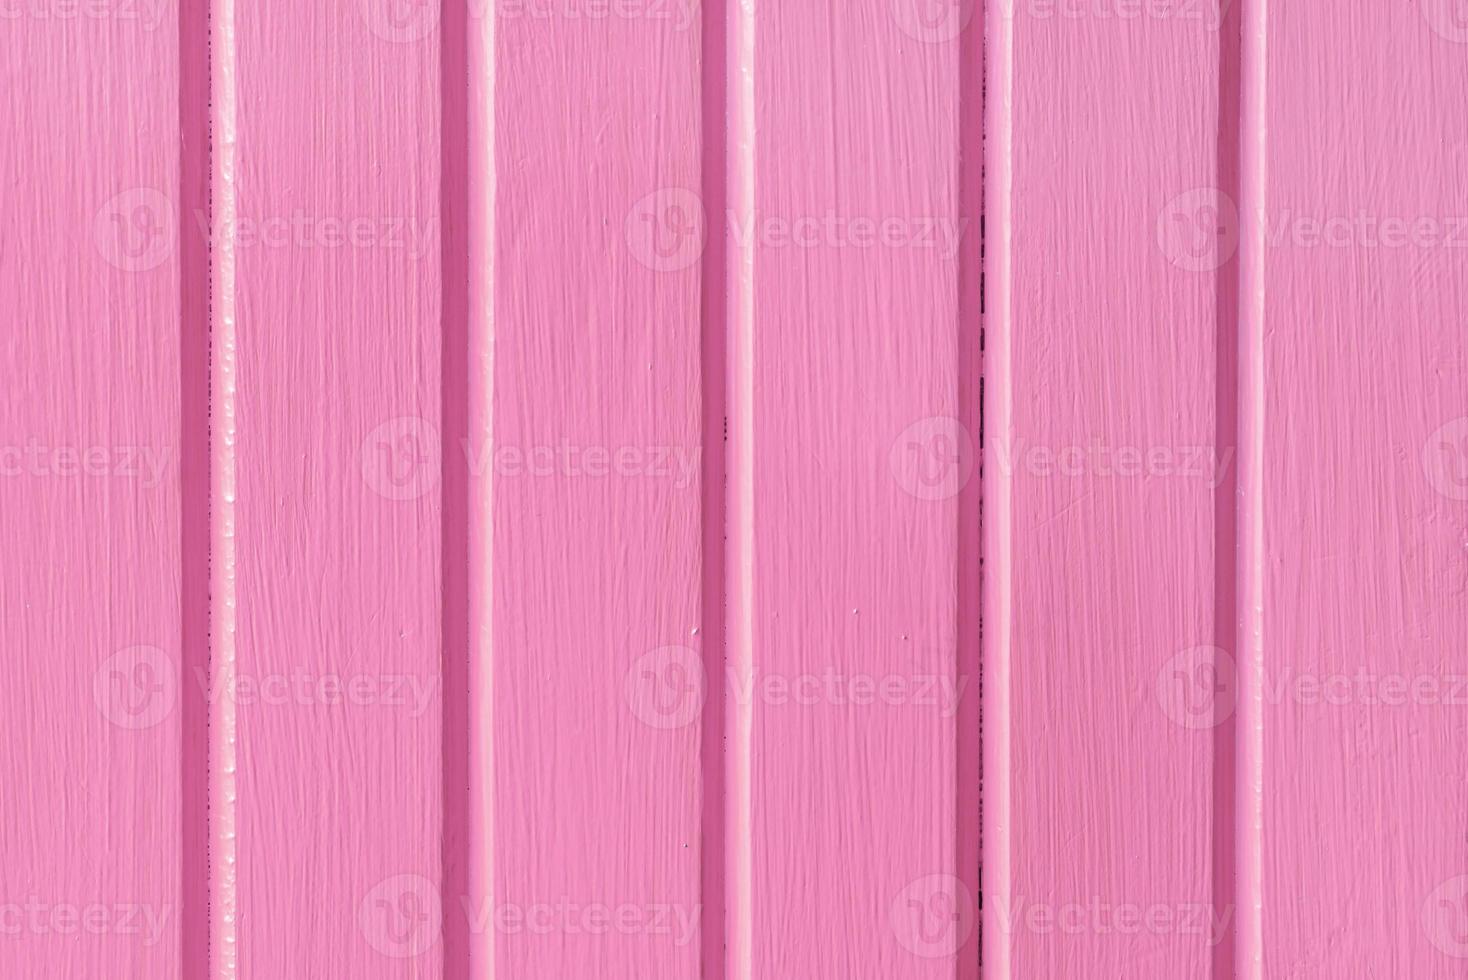 fundo de textura de parede de prancha de madeira rosa foto